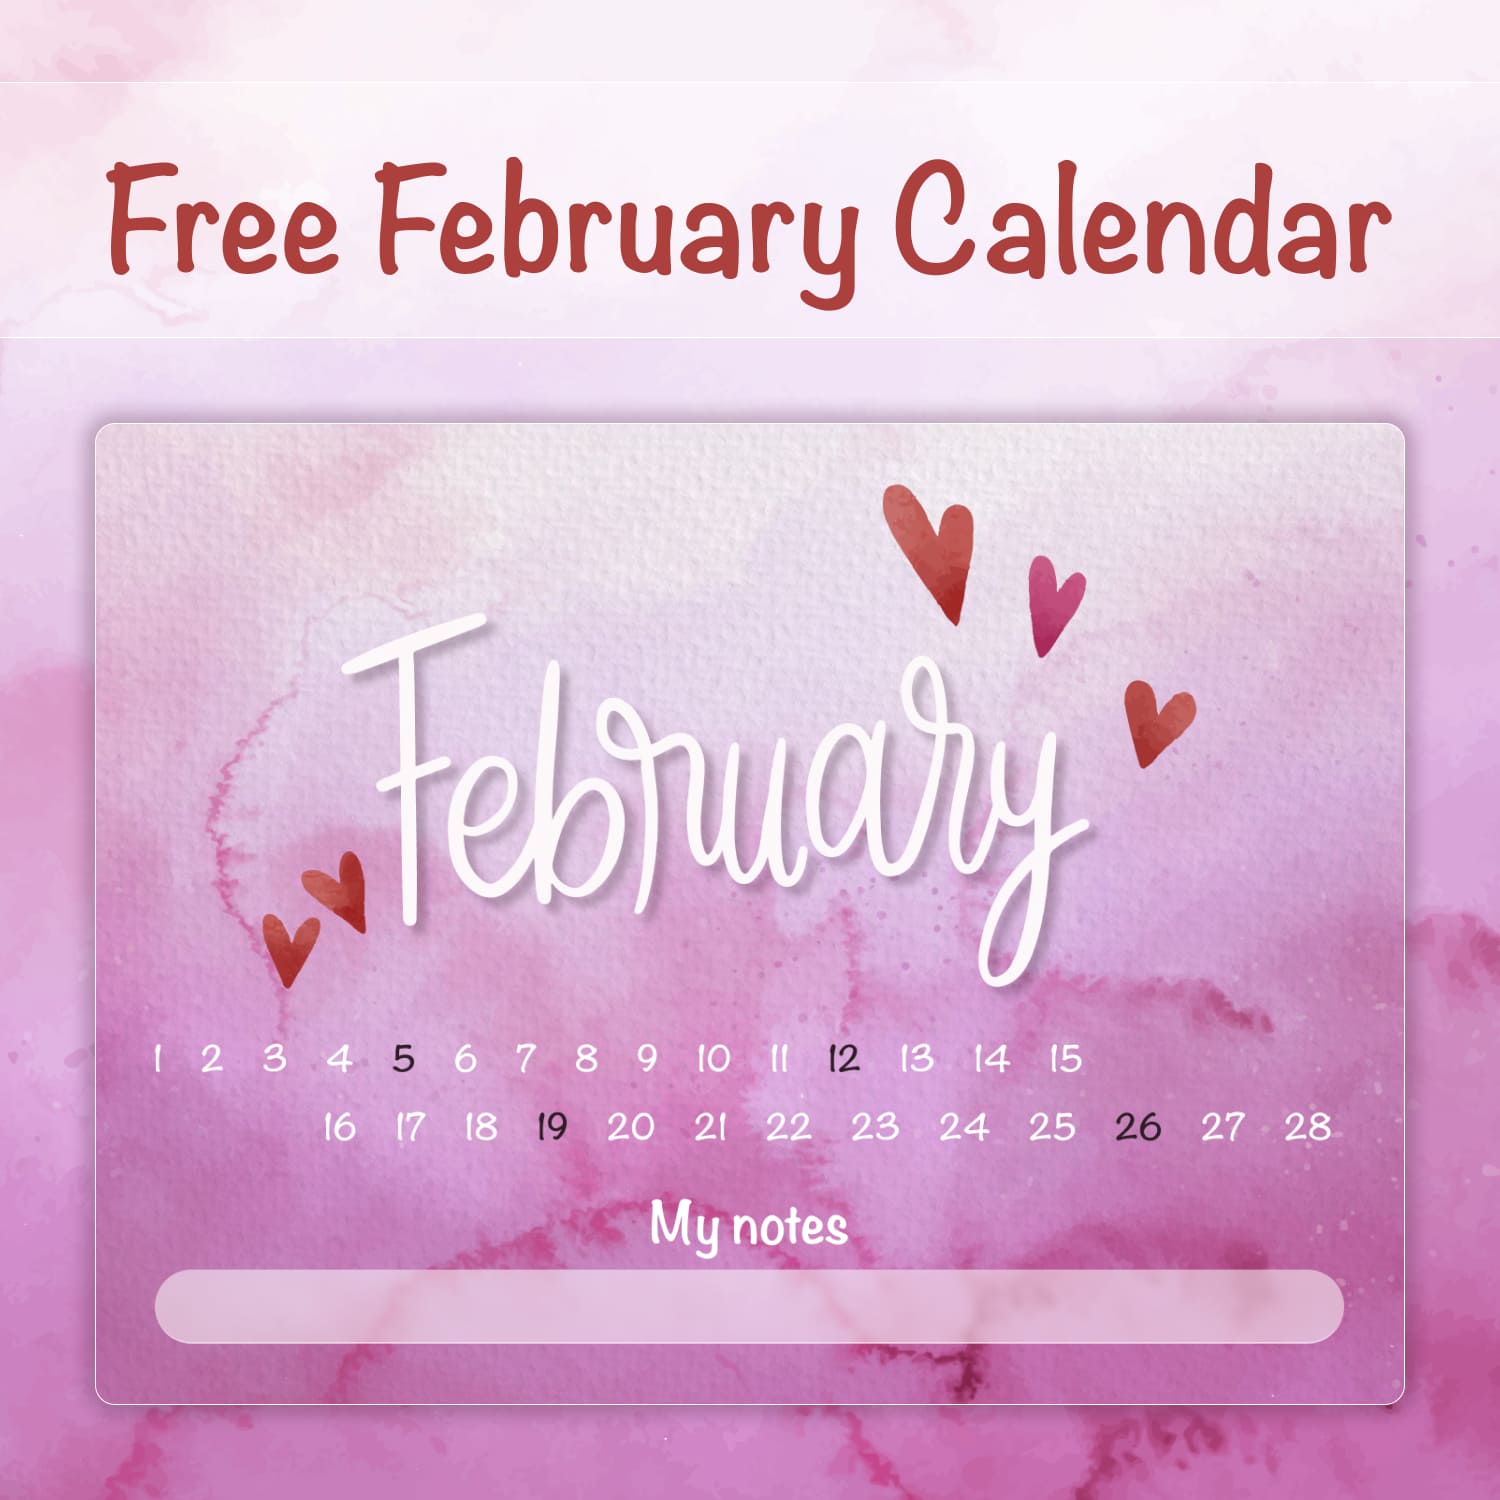 Free Blank Calendar February, main picture 1500x1500.